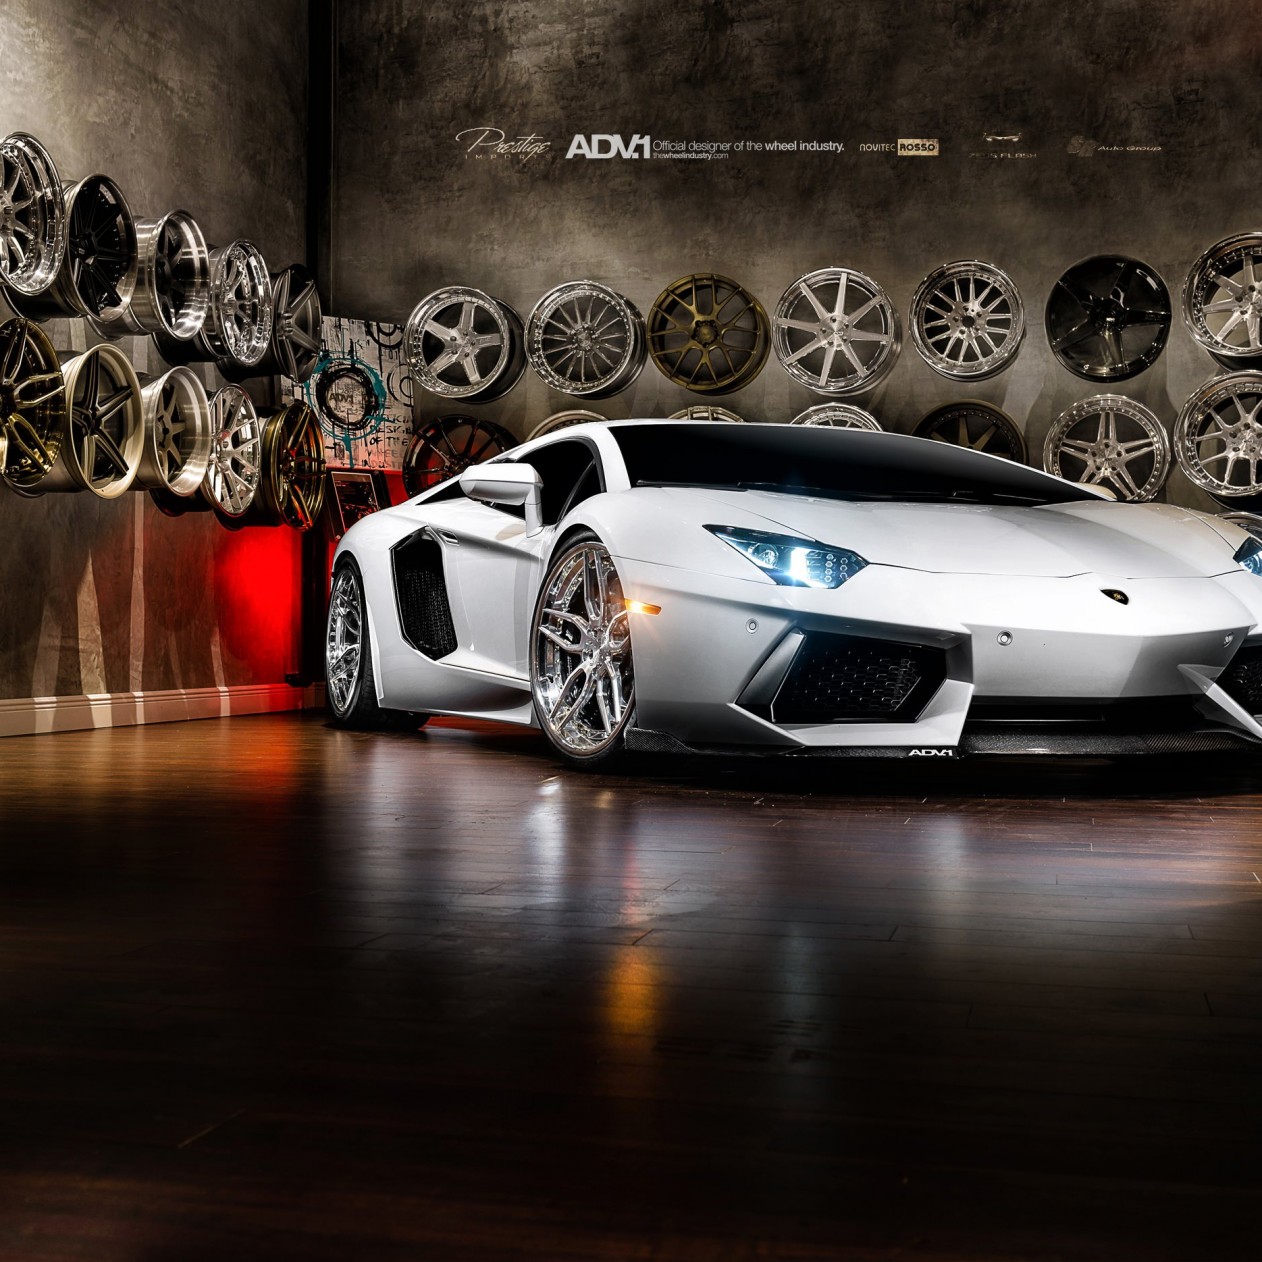 Lamborghini Aventador On ADV.1 Wheels Wallpaper for Apple iPad mini